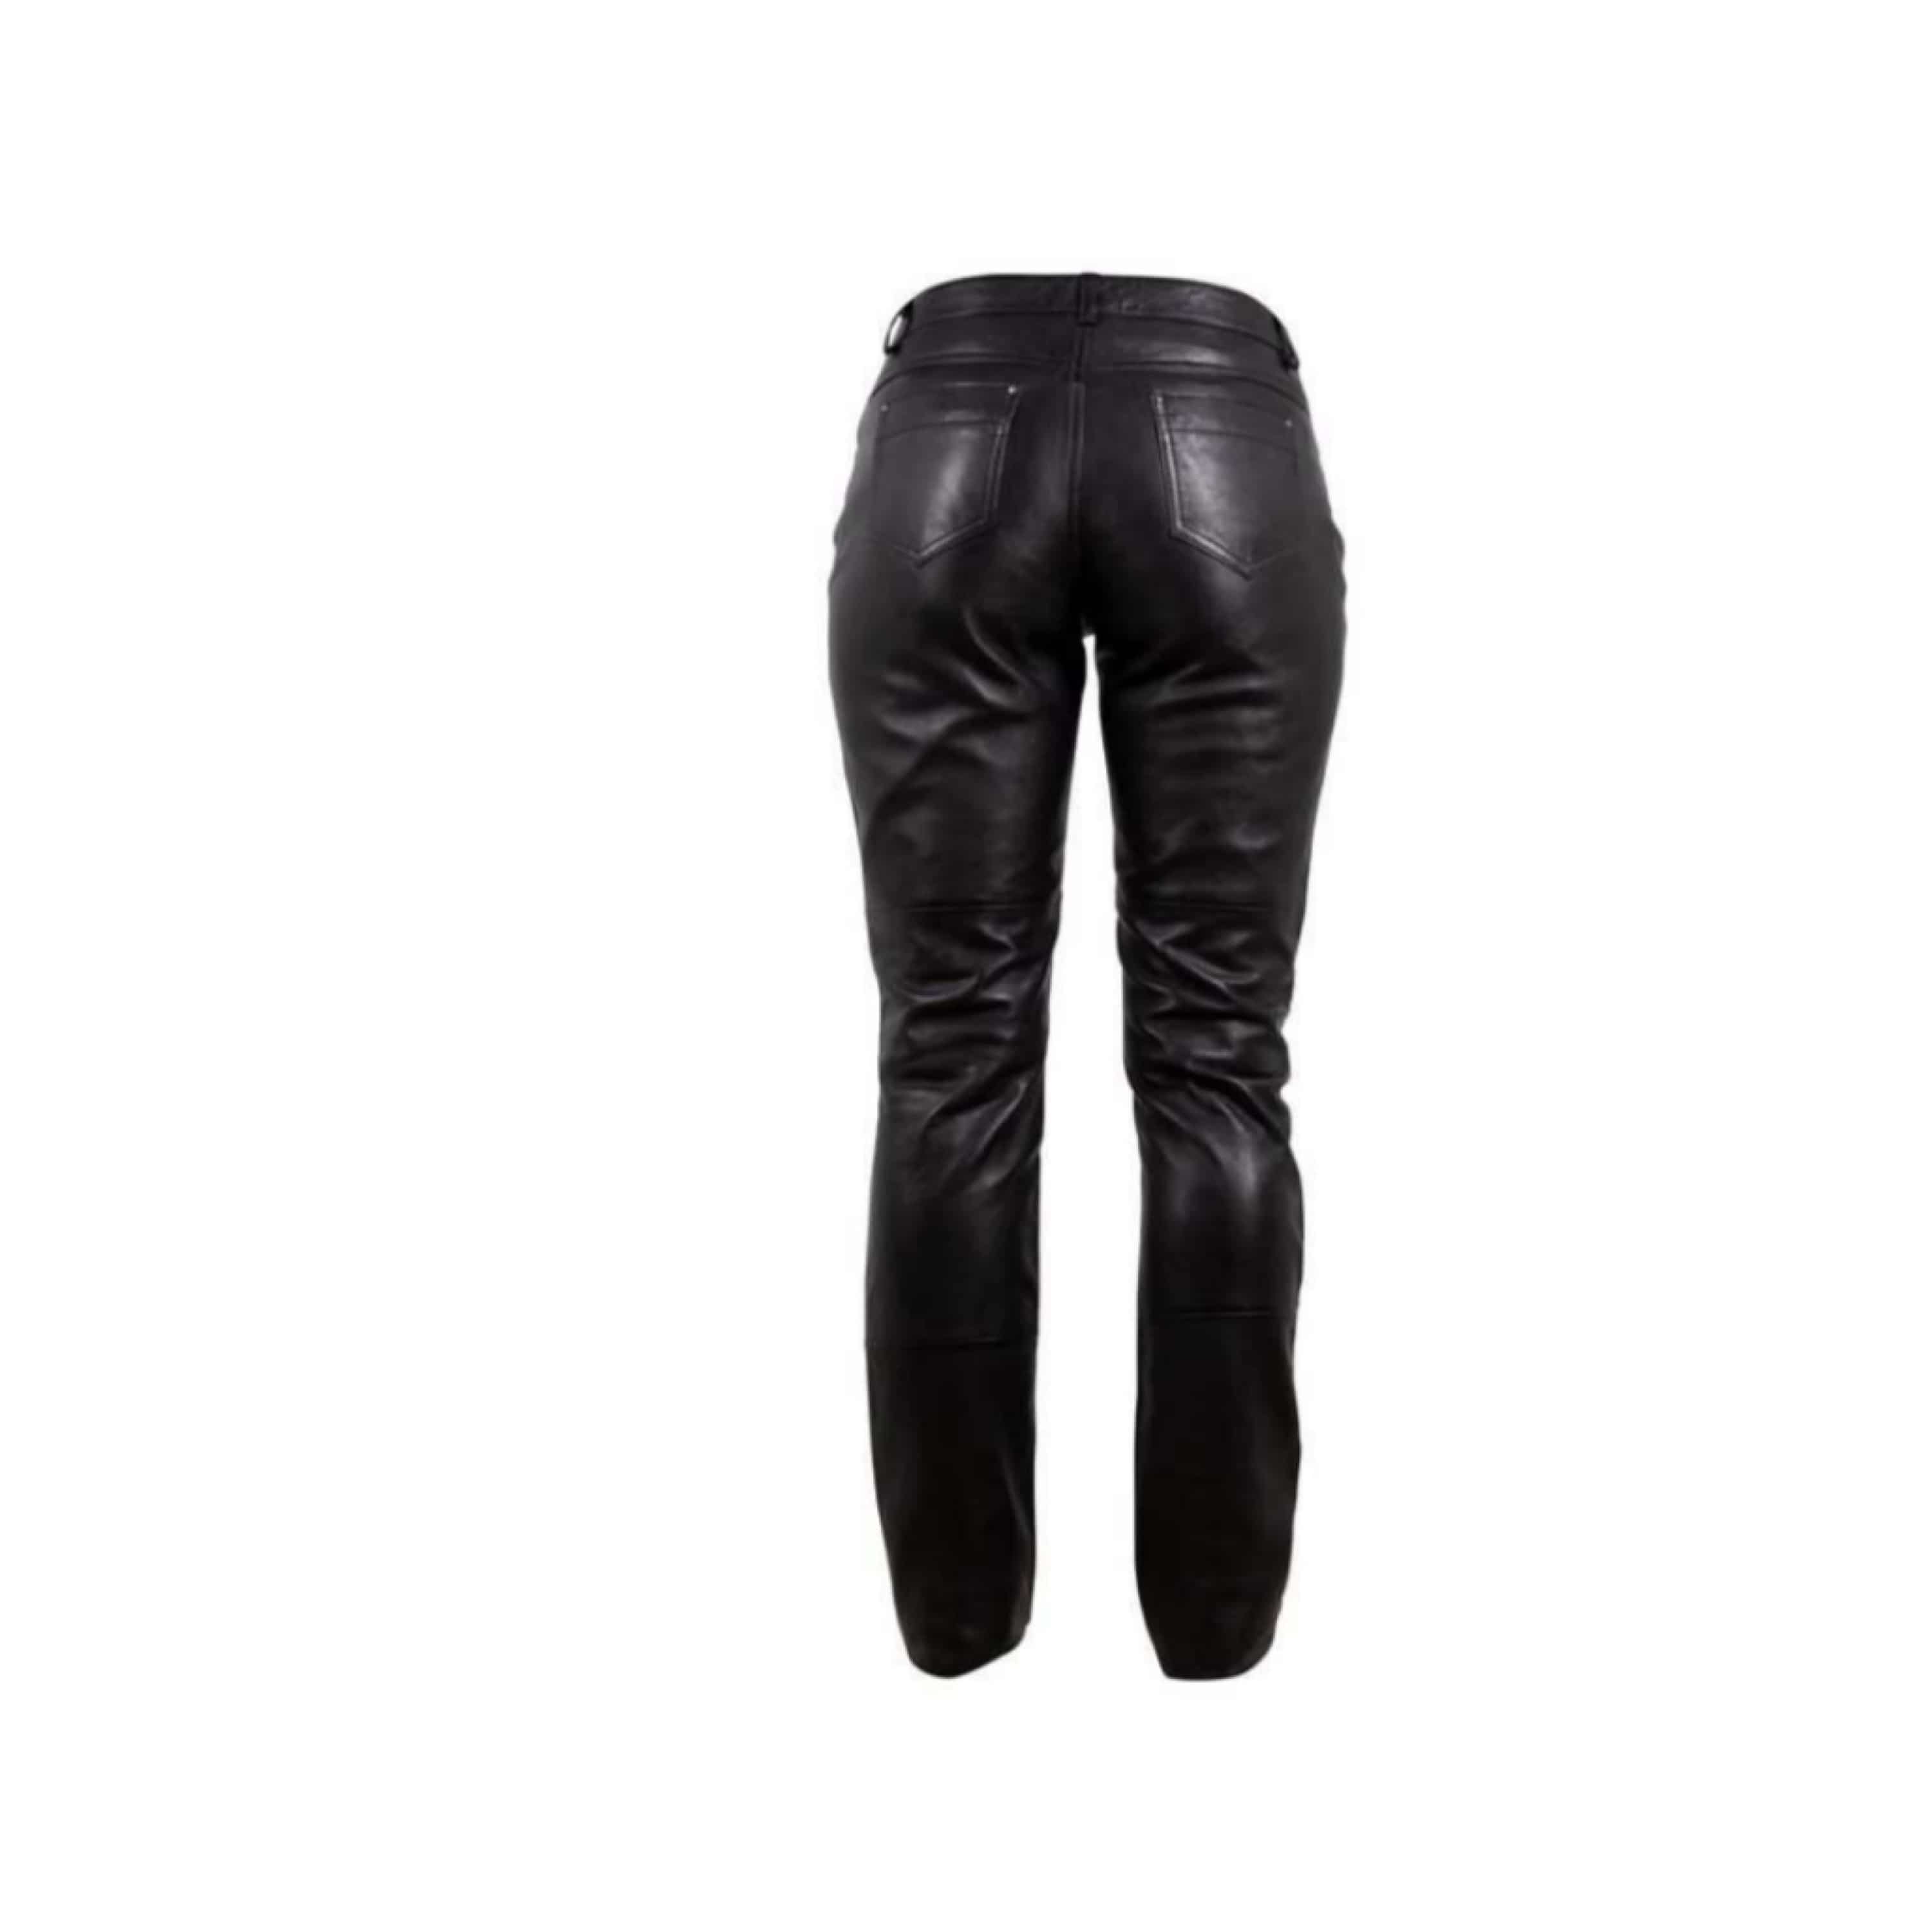 Mauritius Zazoe Leather Pants in Black